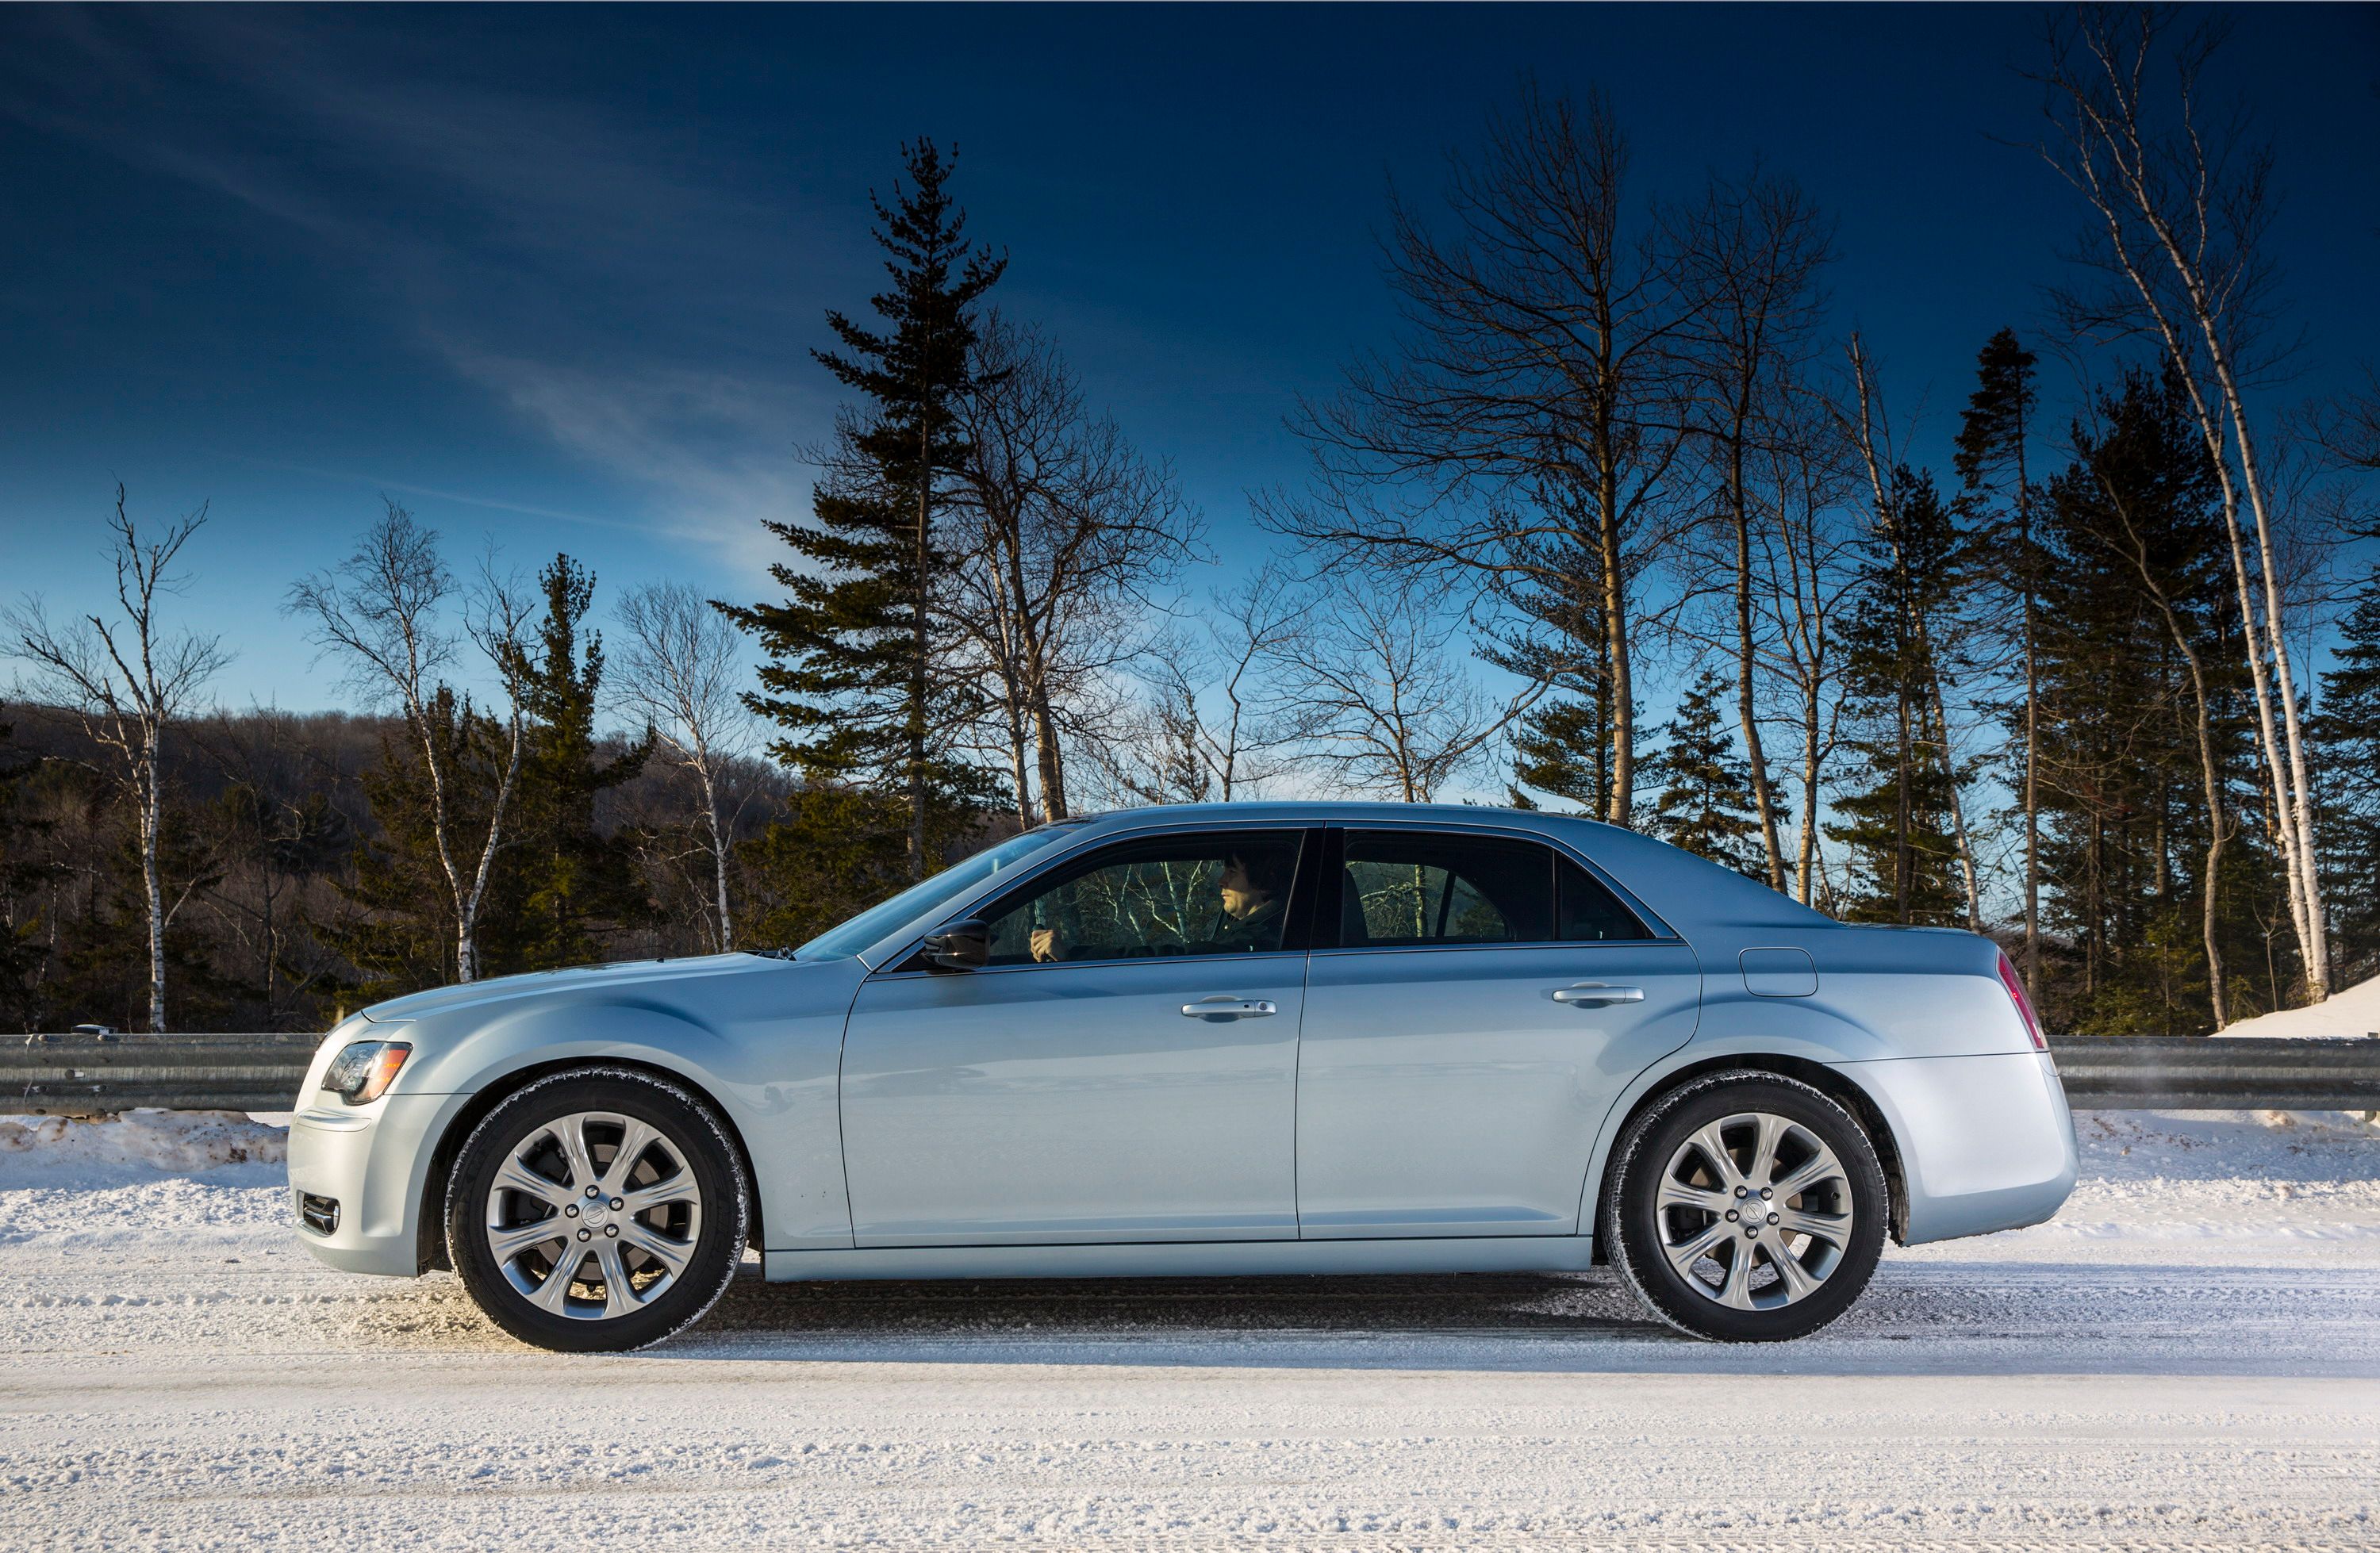 2013 Chrysler 300 Glacier Edition